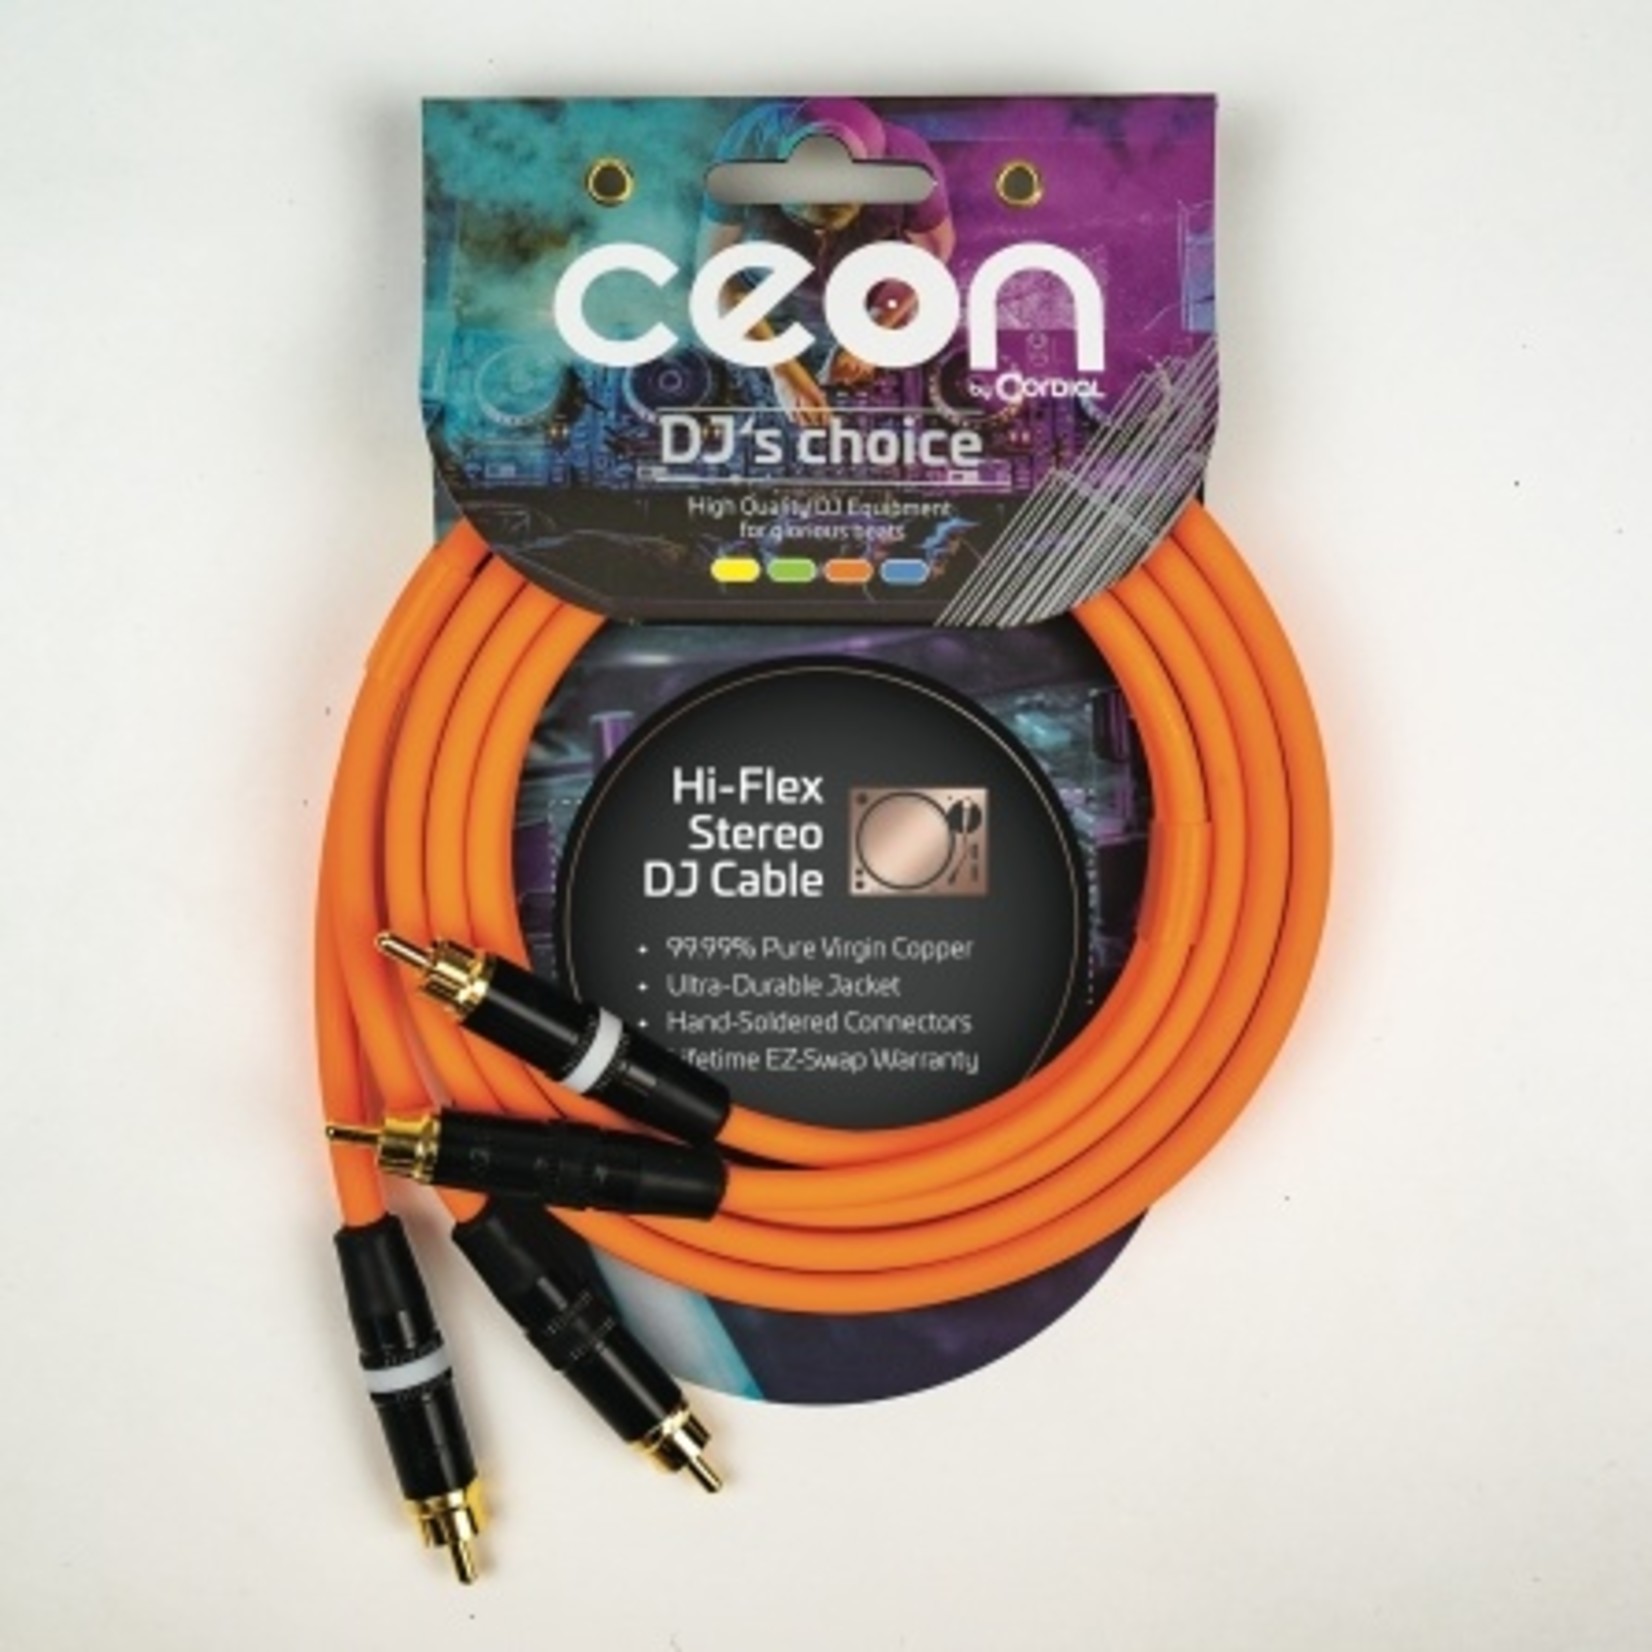 Cordial Cables Cordial Cables Premium DJ Dual/Mono (Black Light) Cable, Ceon Series - Hi-Flex DJ's Choice Stereo RCA to RCA 2-Foot Cable: Neon Orange